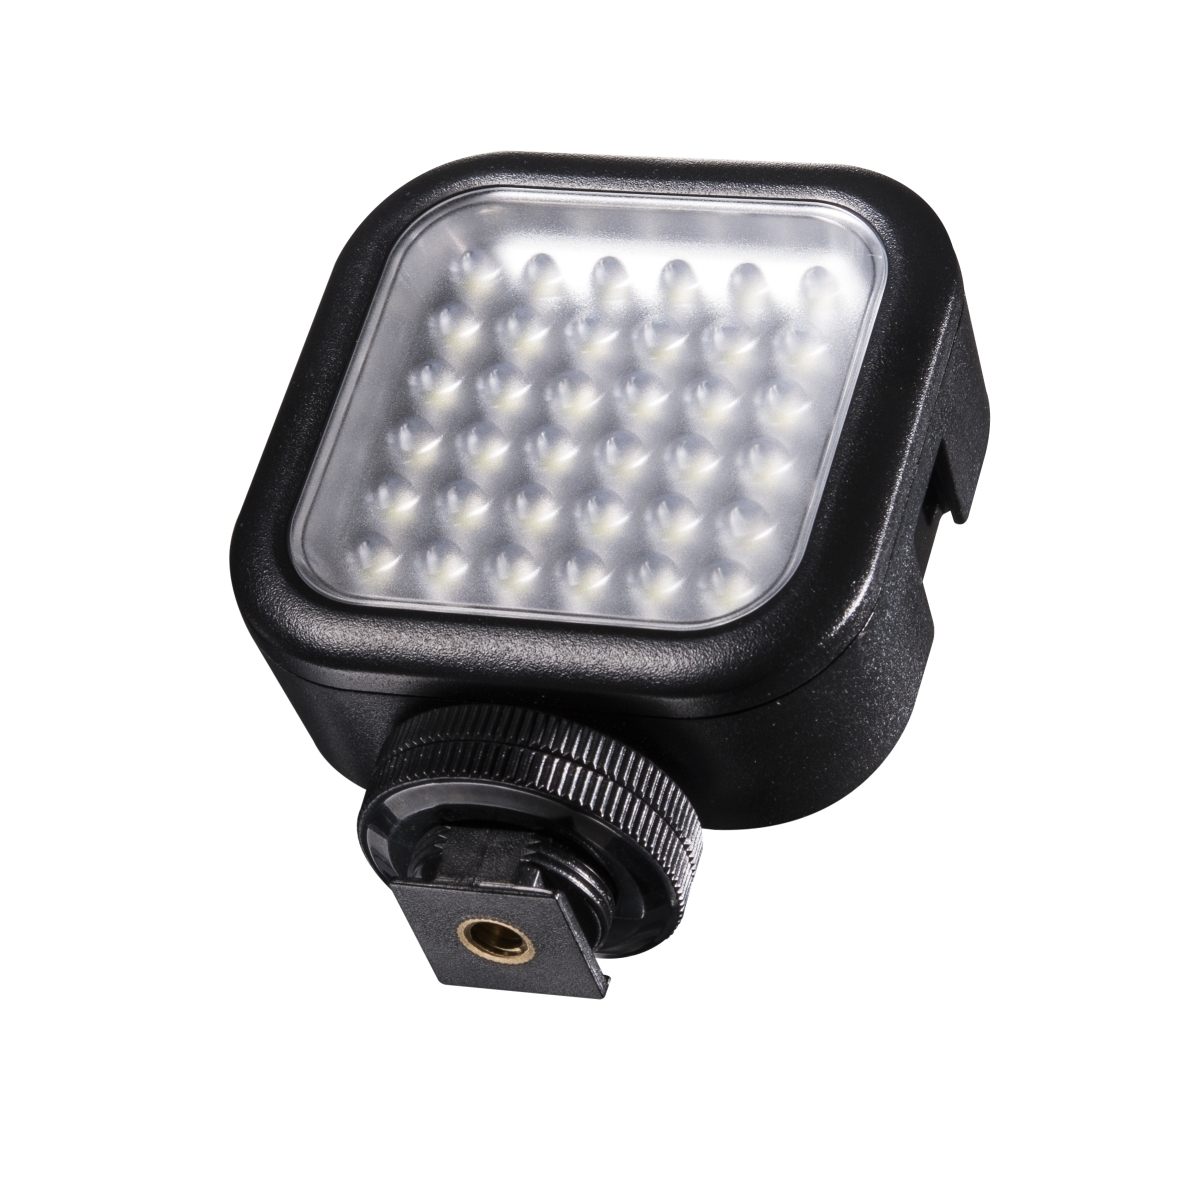 Walimex pro LED Photo Video Light 36 LED dimmerabile